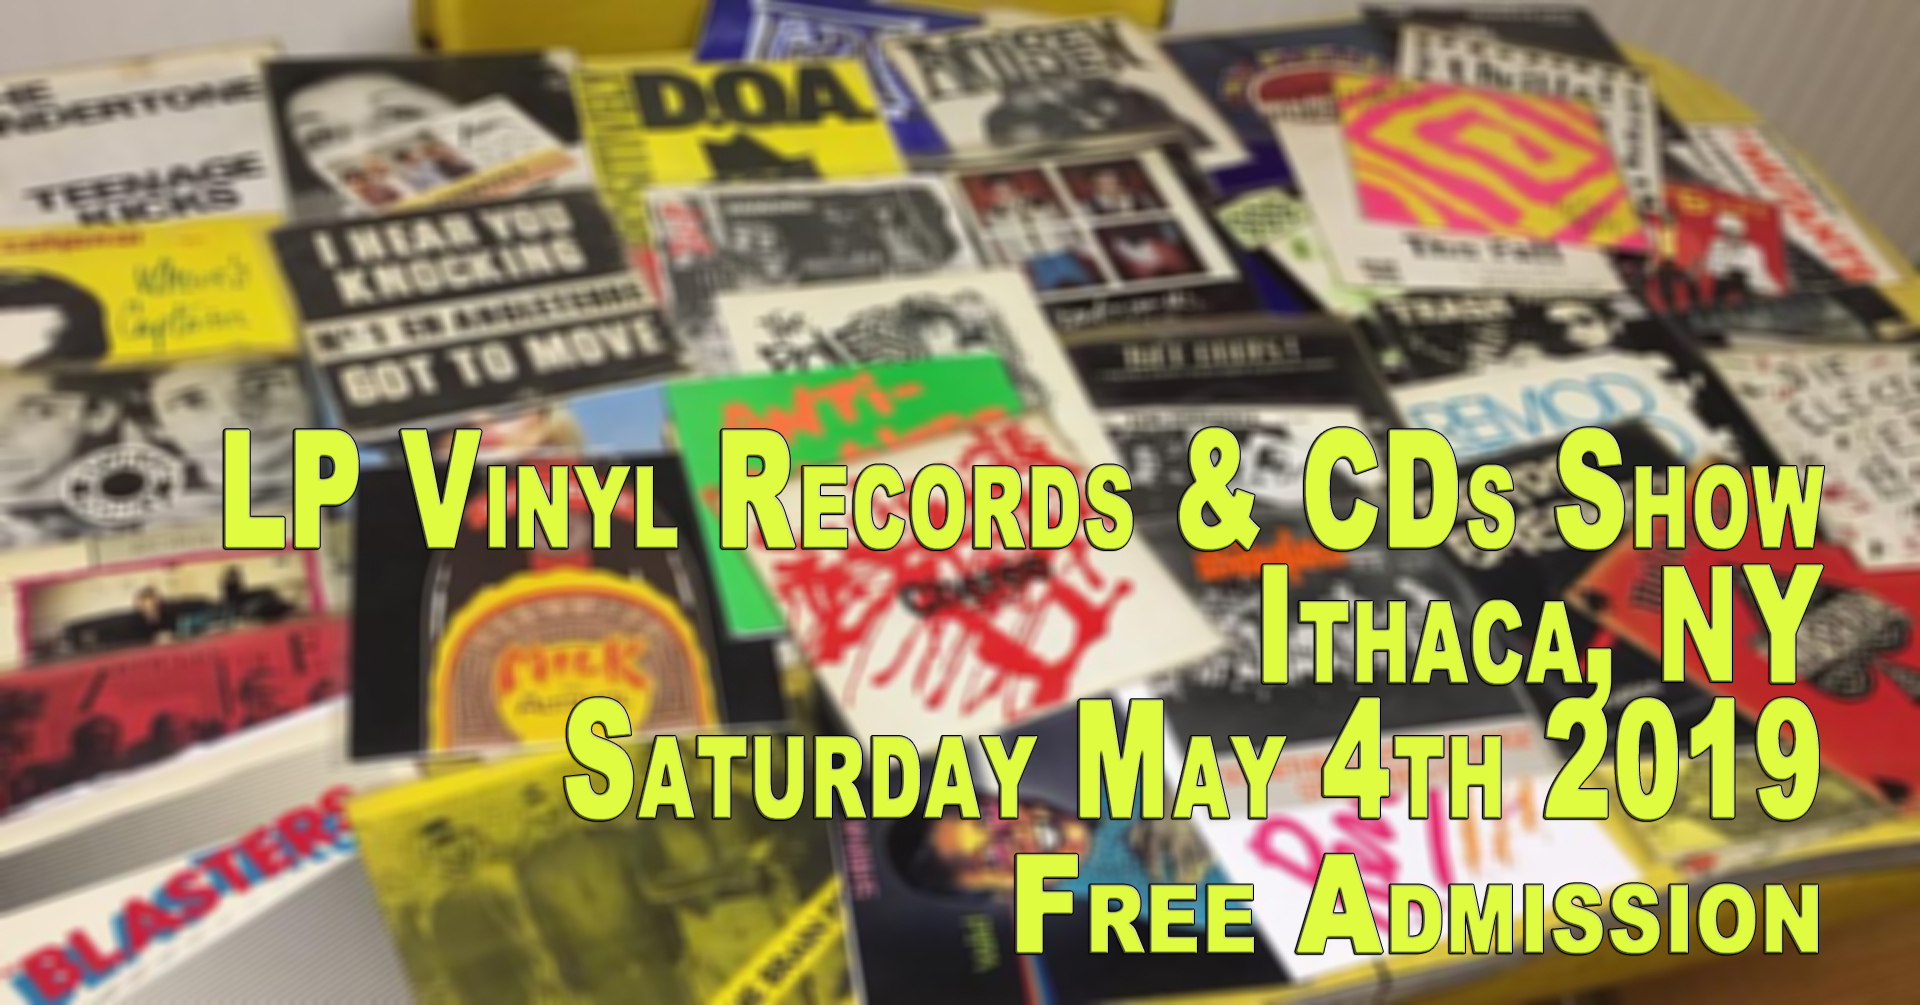 Ithaca, NY – LP Vinyl Records and CDs Fair – Saturday May 4th, 2019